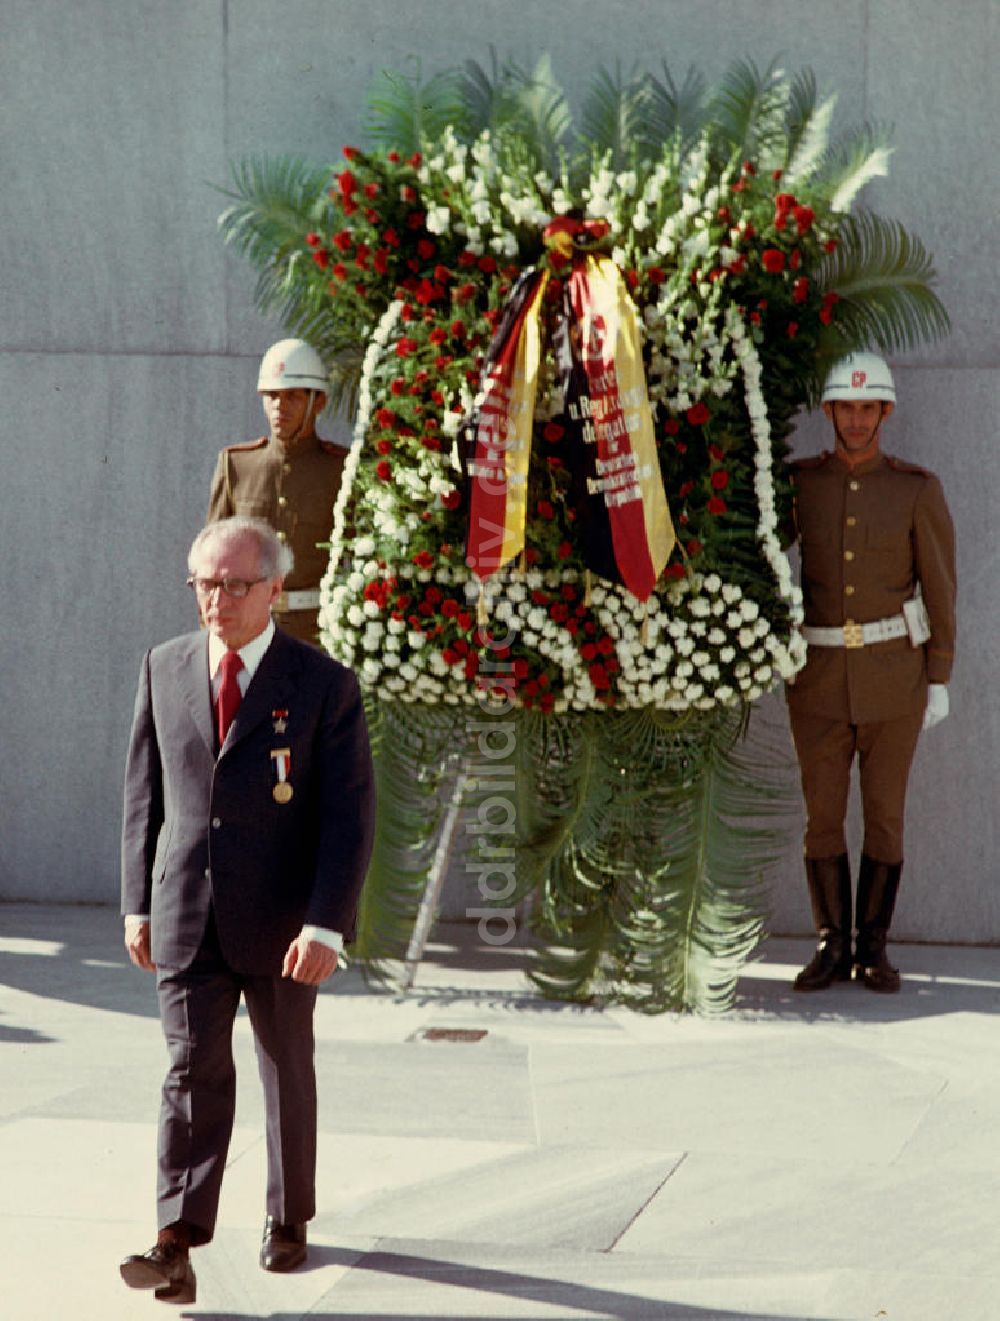 DDR-Fotoarchiv: Havanna - Staatsbesuch Honecker 1974 in Kuba / Cuba - Kranzniederleg